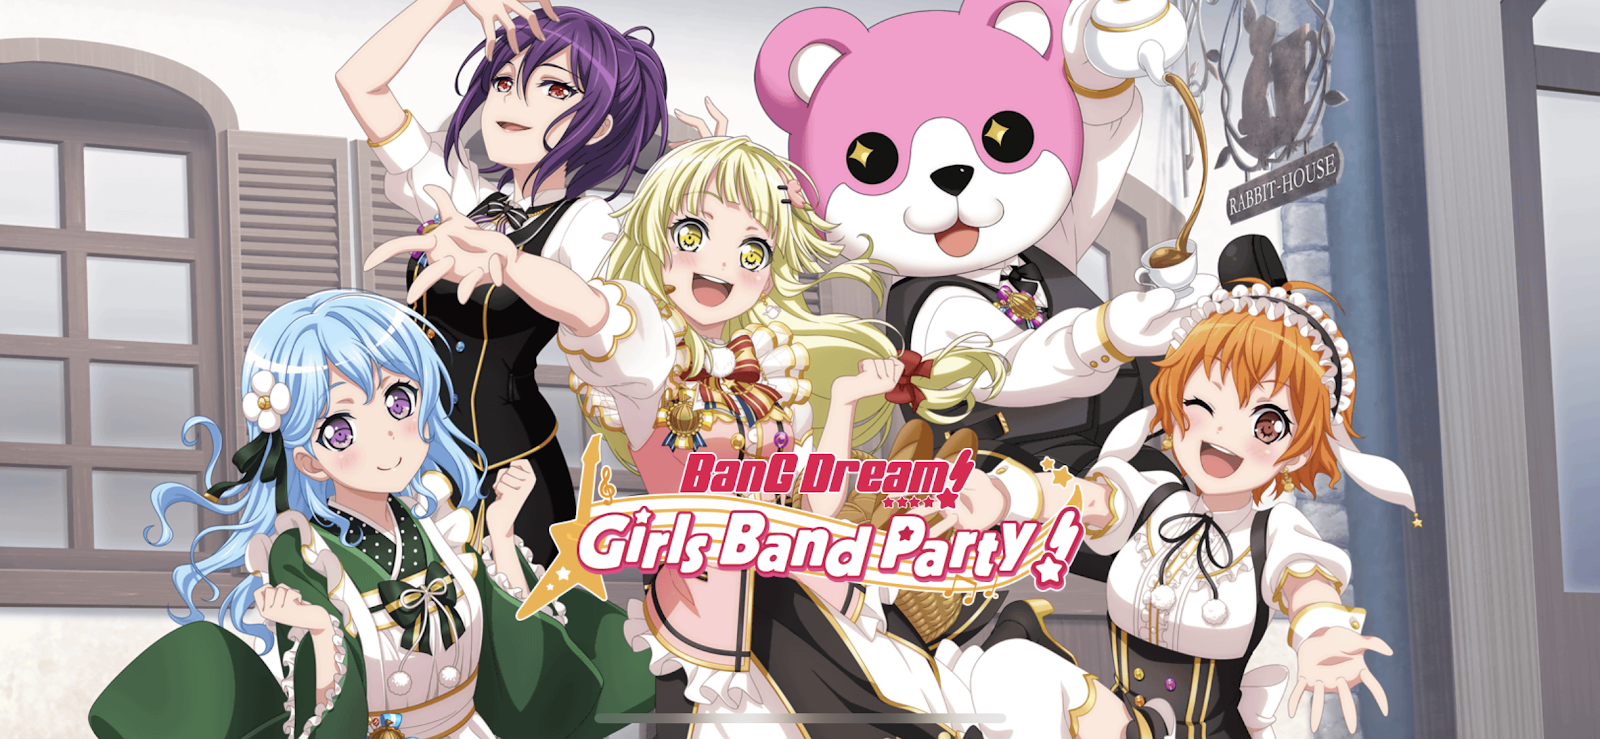 GLOBAL/EN] [INSTANT] 54000+ Stars BanG Dream Girls Band Party Bandori –  Skye1204 Gaming Shop